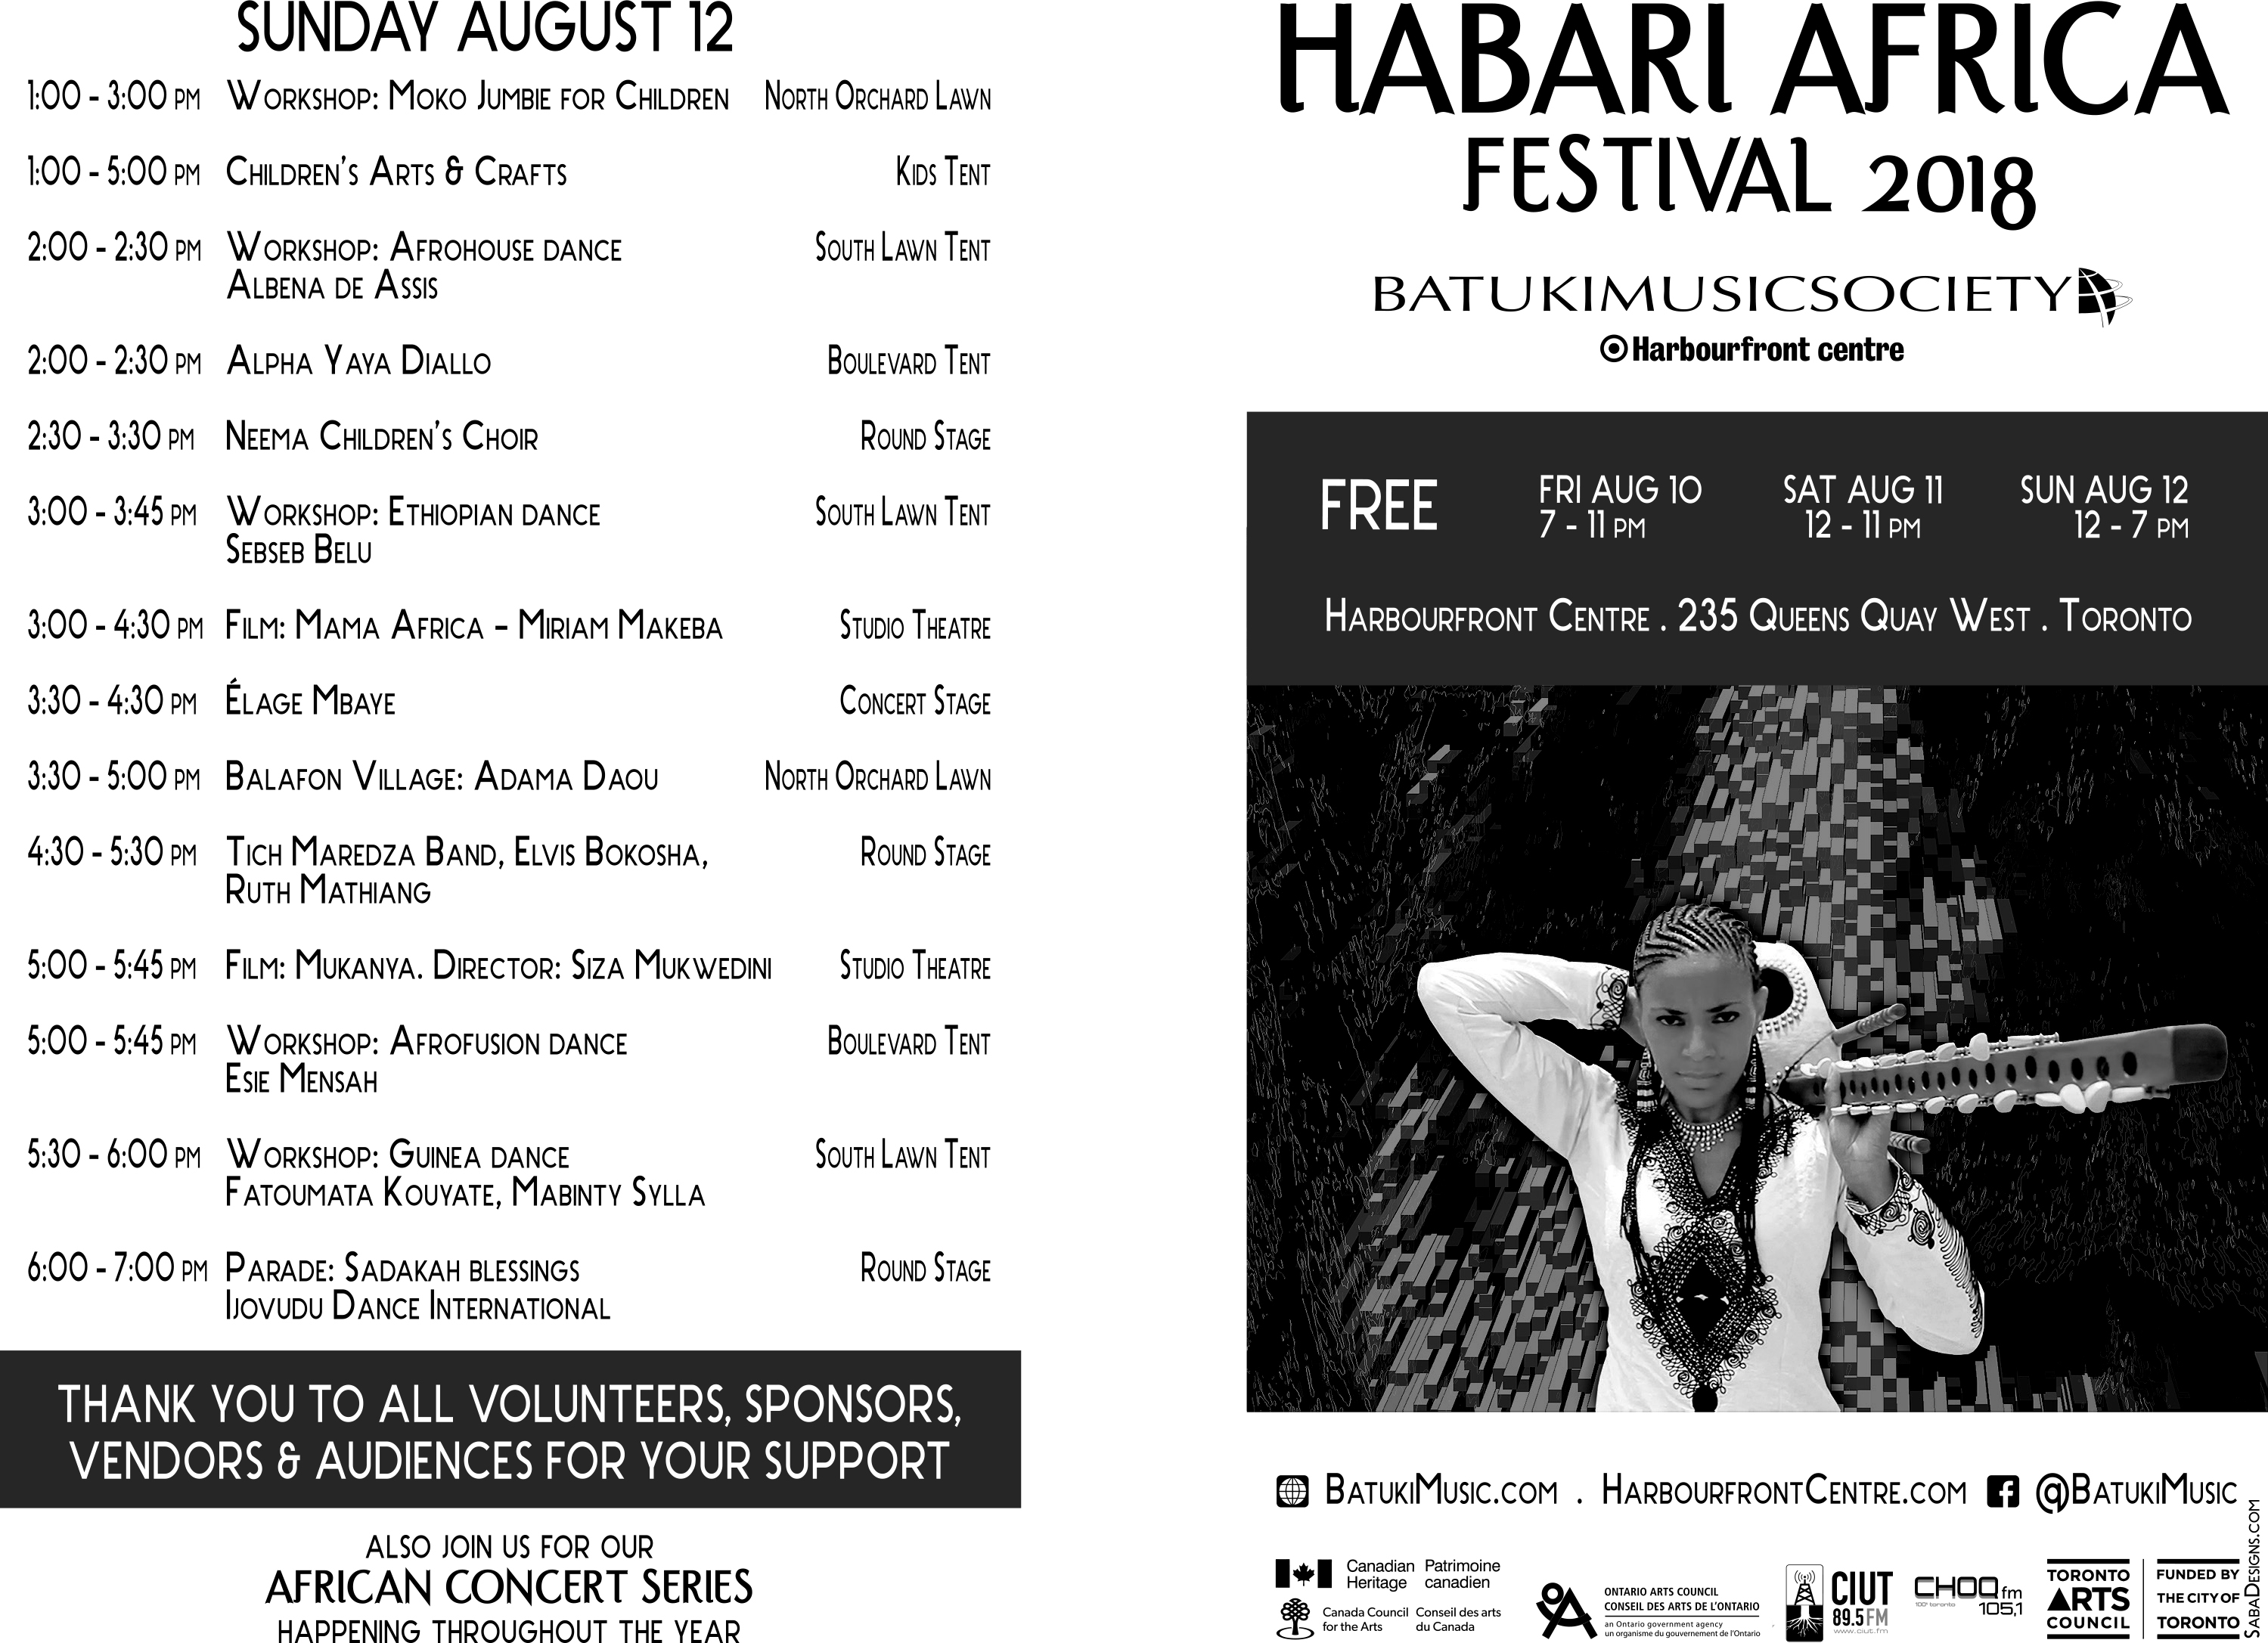 Full Schedule 2018 Habari Africa Festival @ Harbourfront